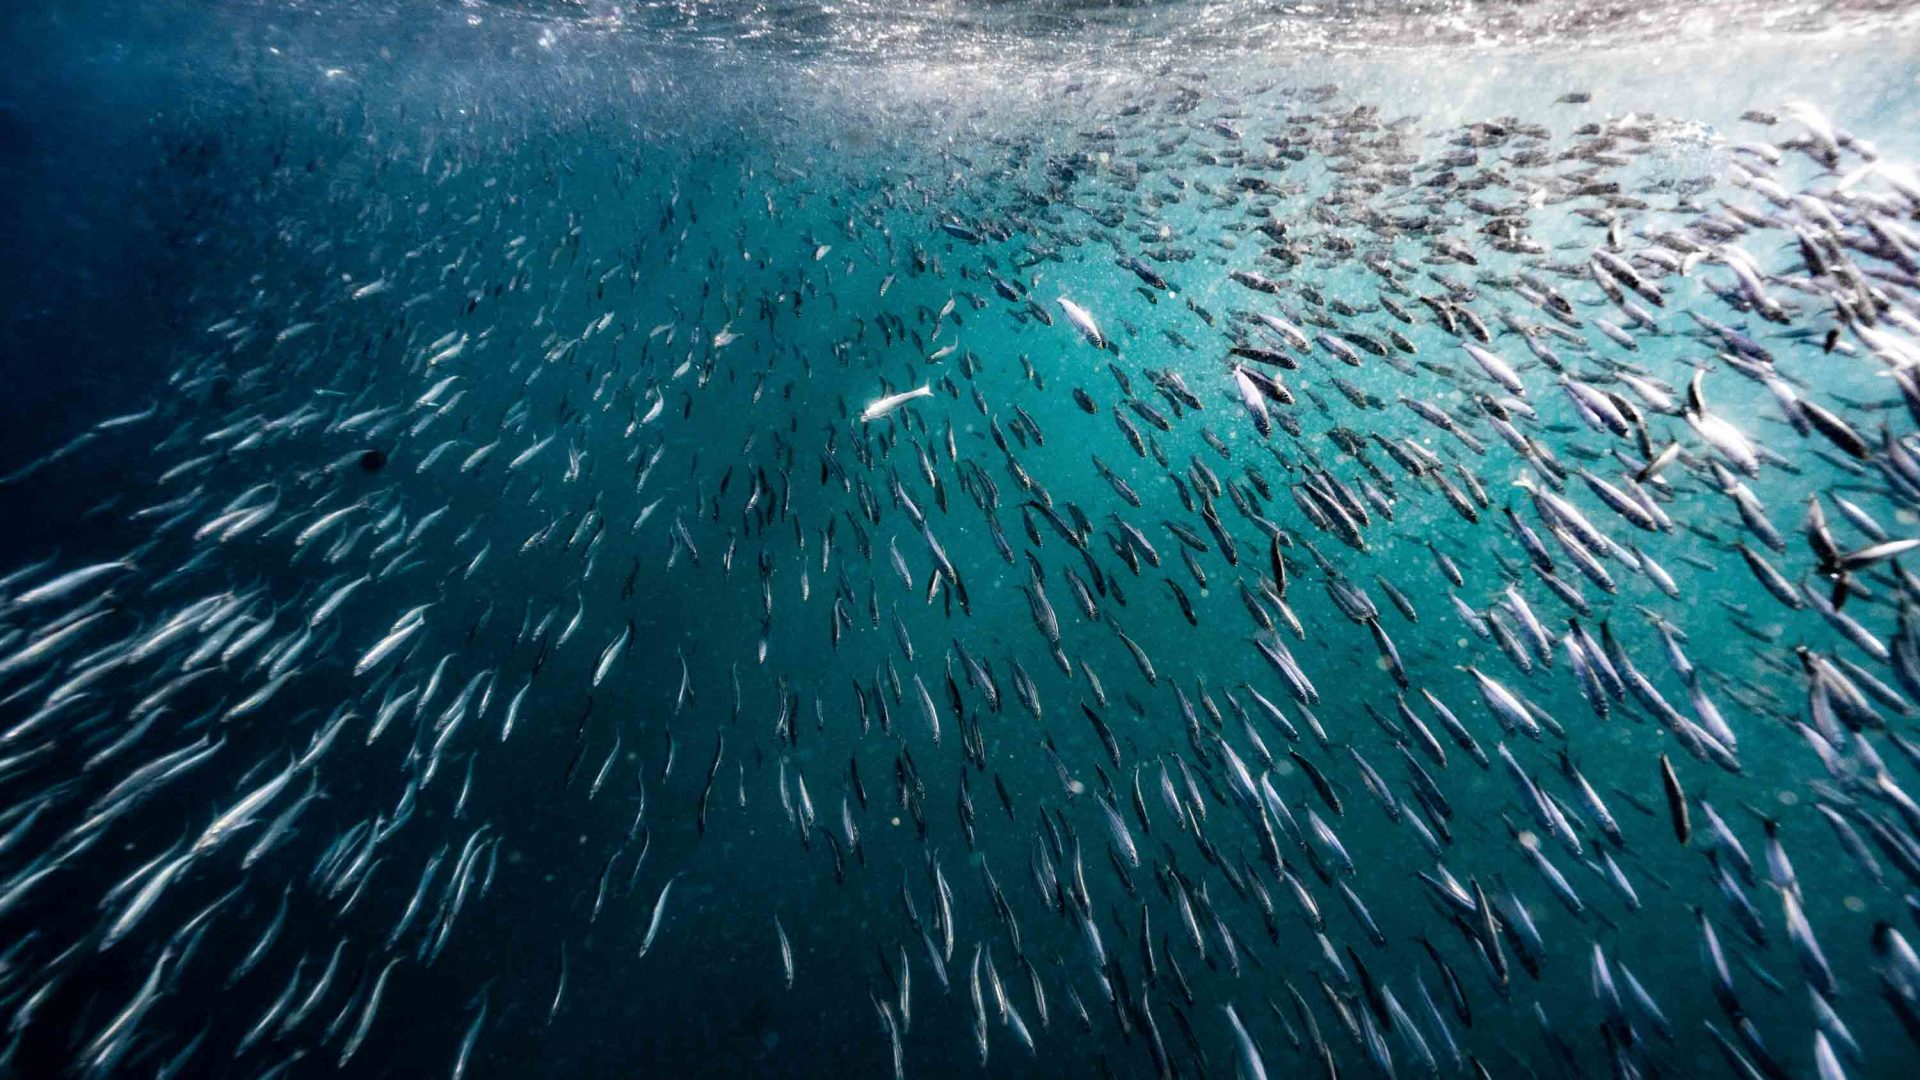 Schools of sardines swimming.